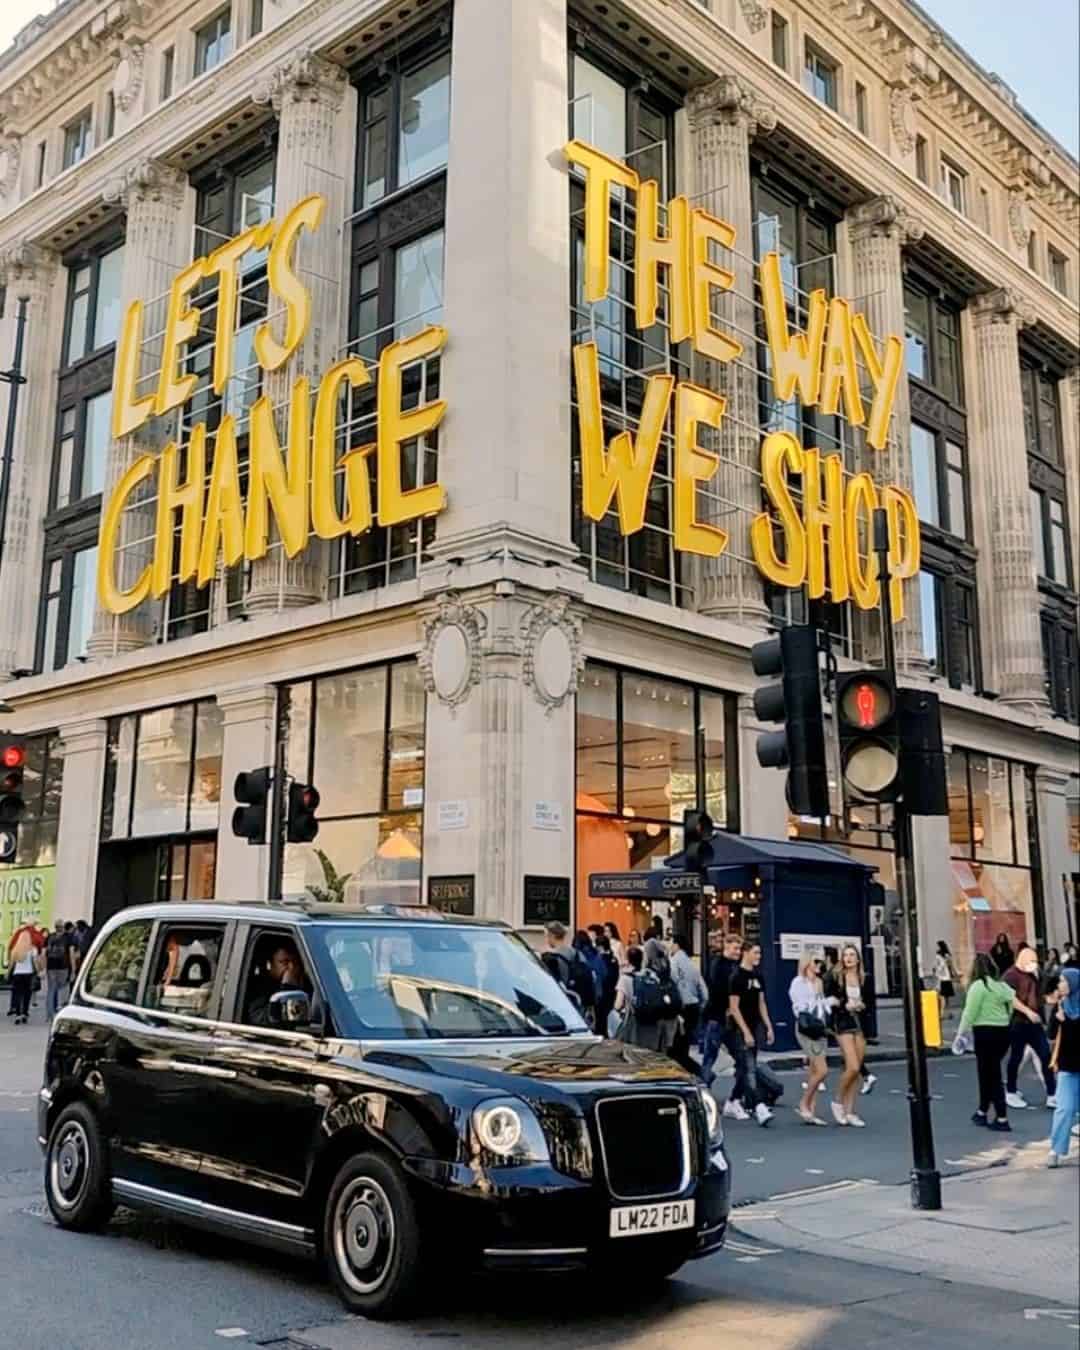 Tax Free Shopping in London